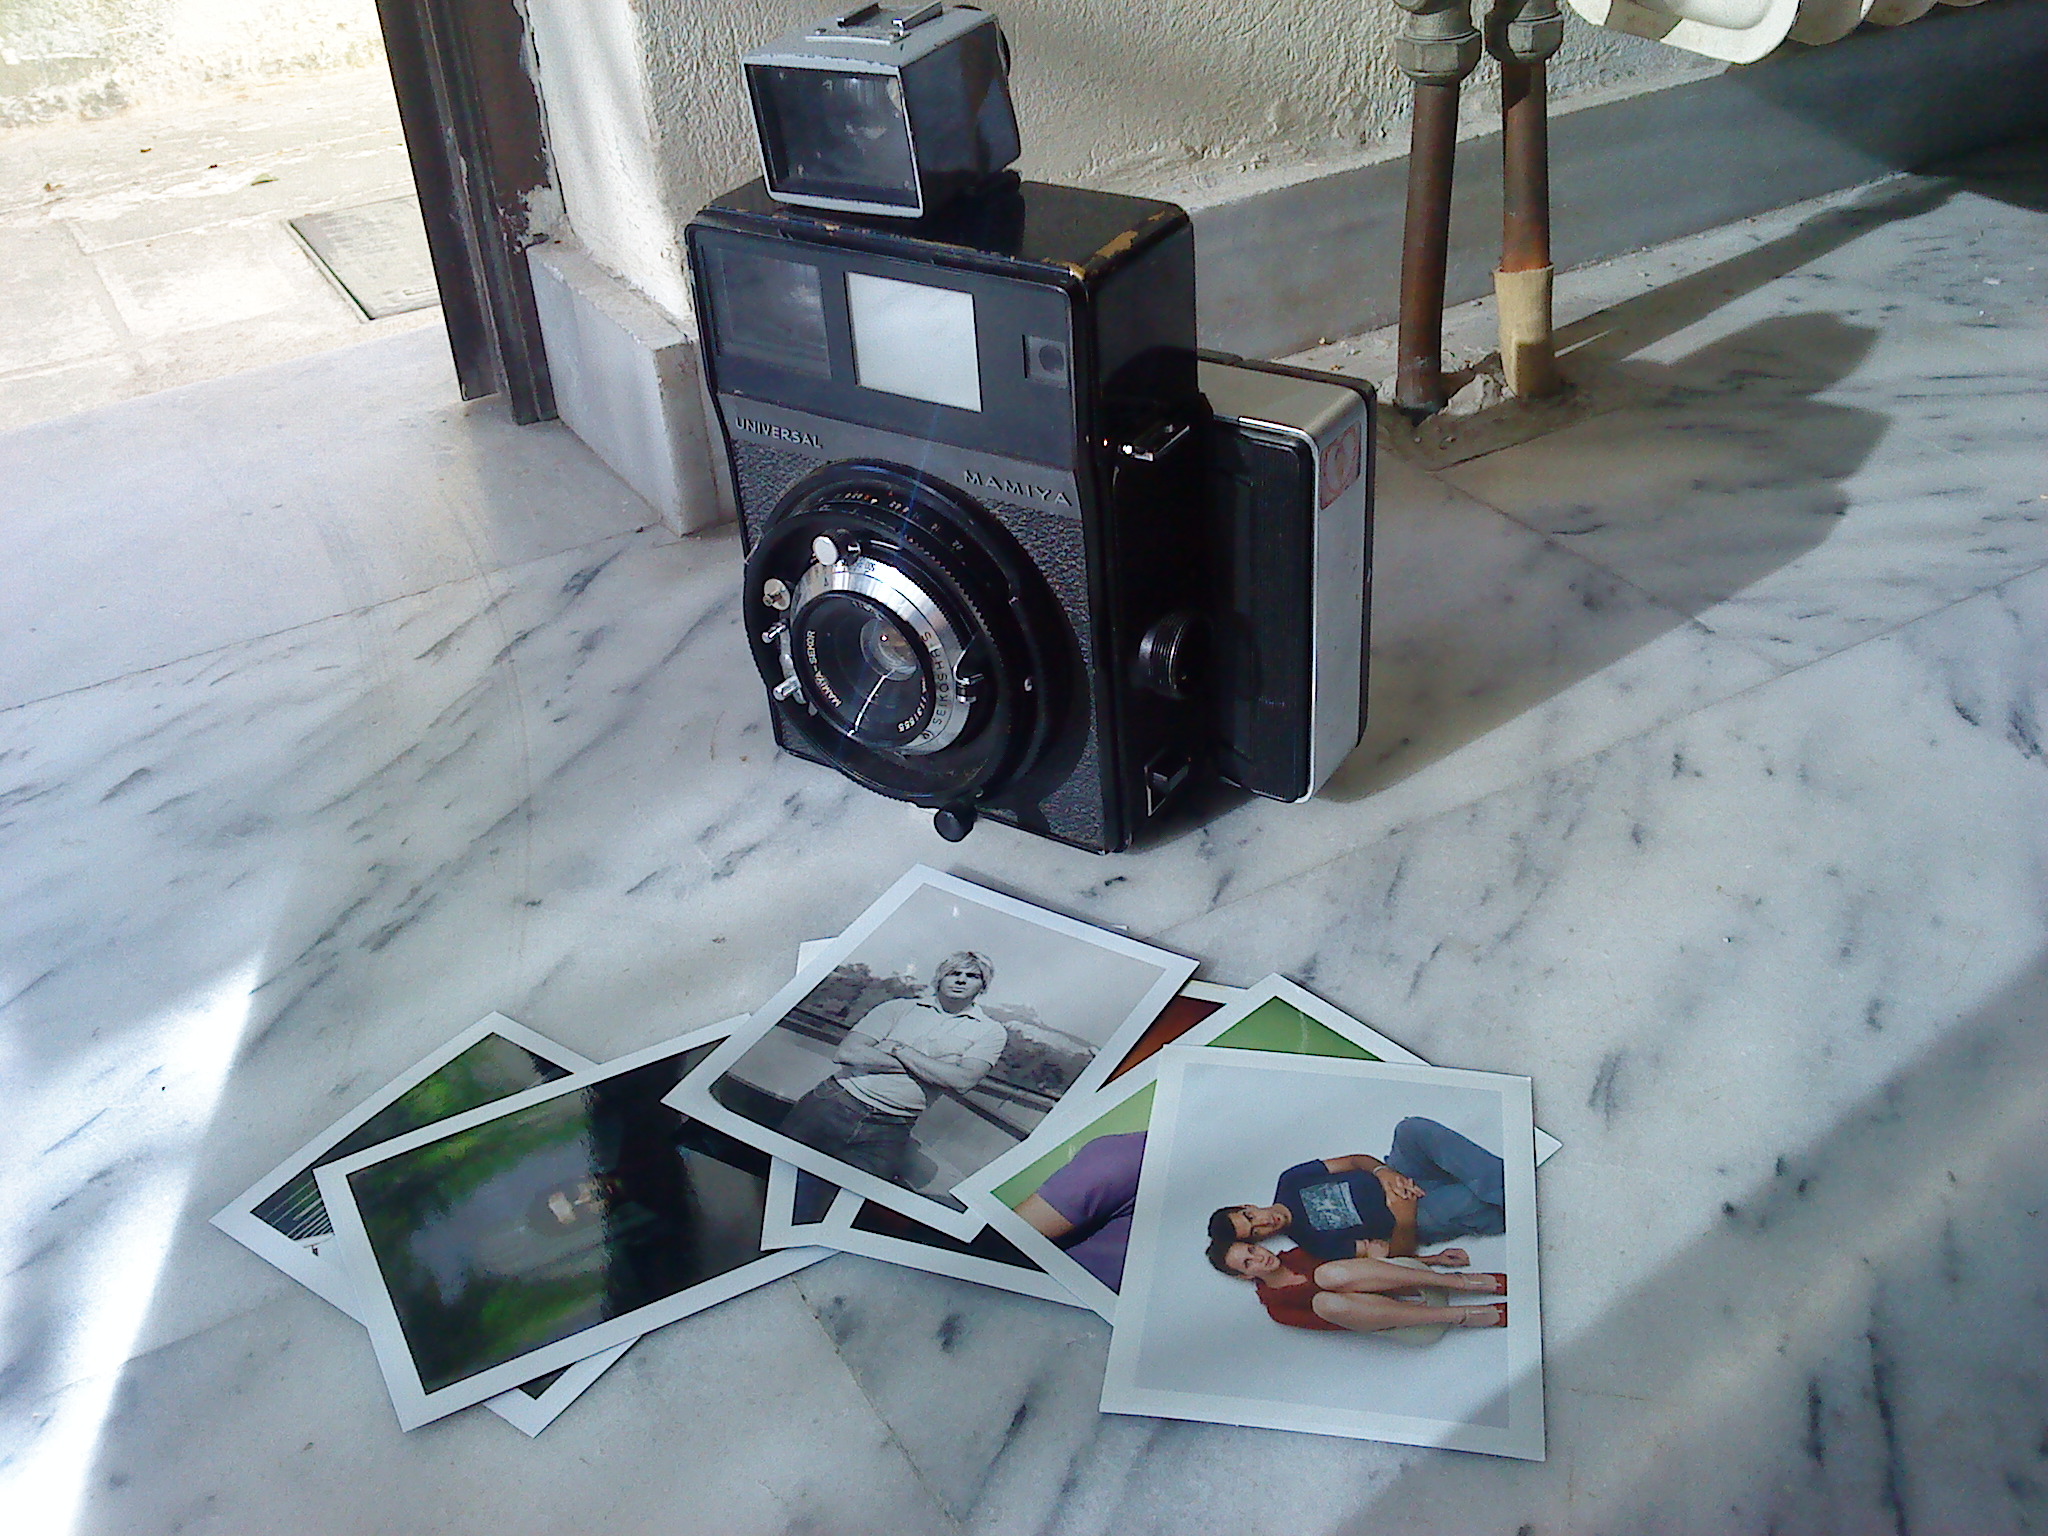 La última cámara polaroid: una vieja Mamiya